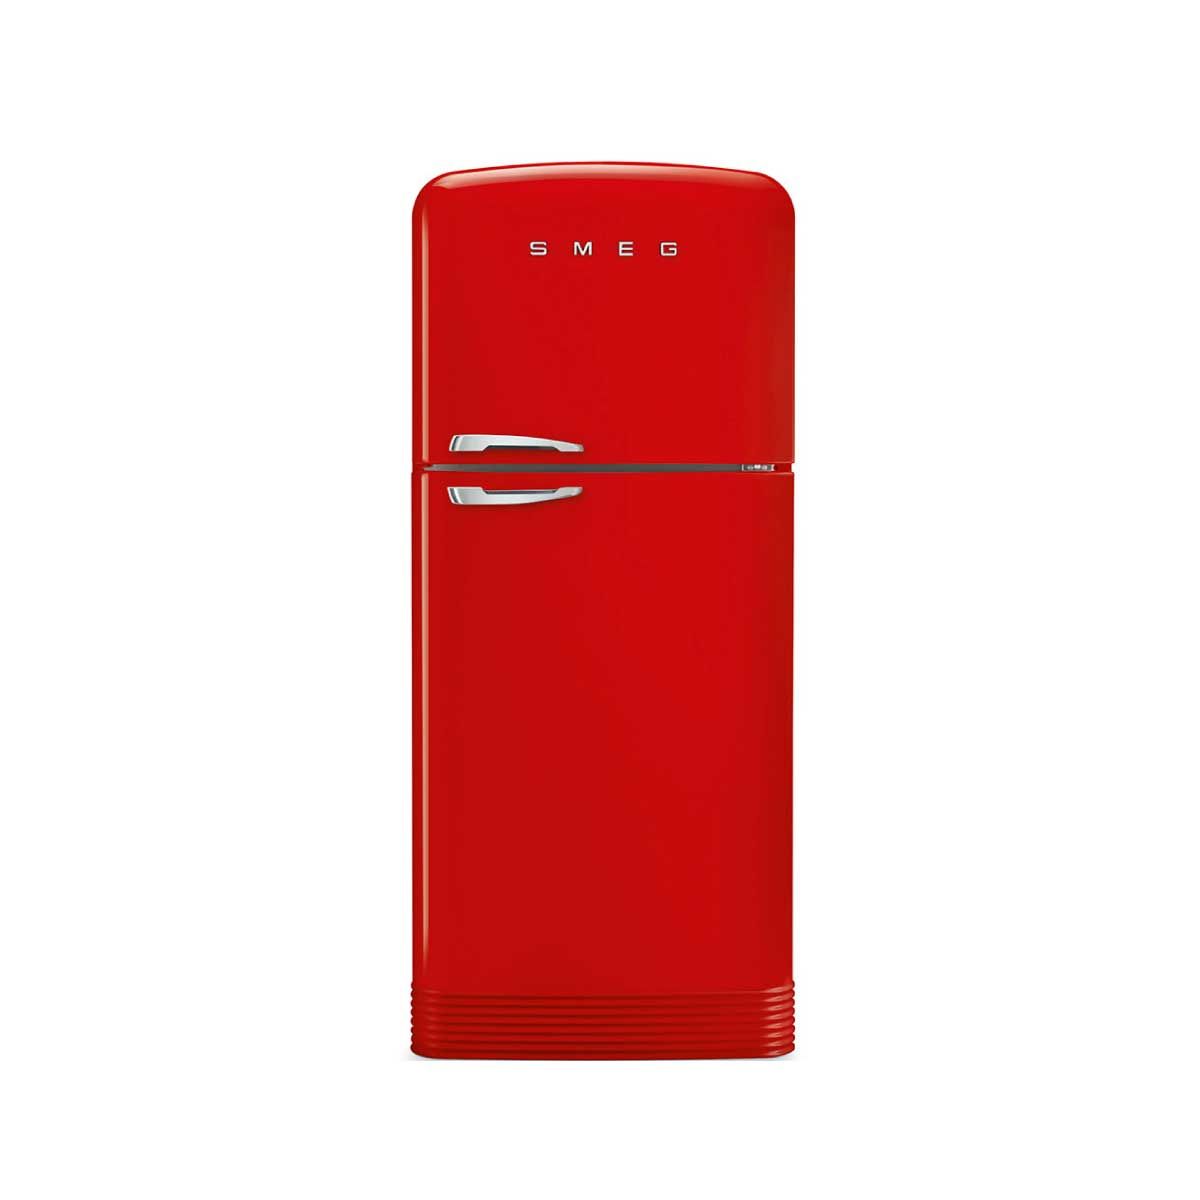 SMEG ตู้เย็น 2 ประตู 16.49 Q.สไตล์ 50  Retro รุ่น FAB50RRD5 สีแดง